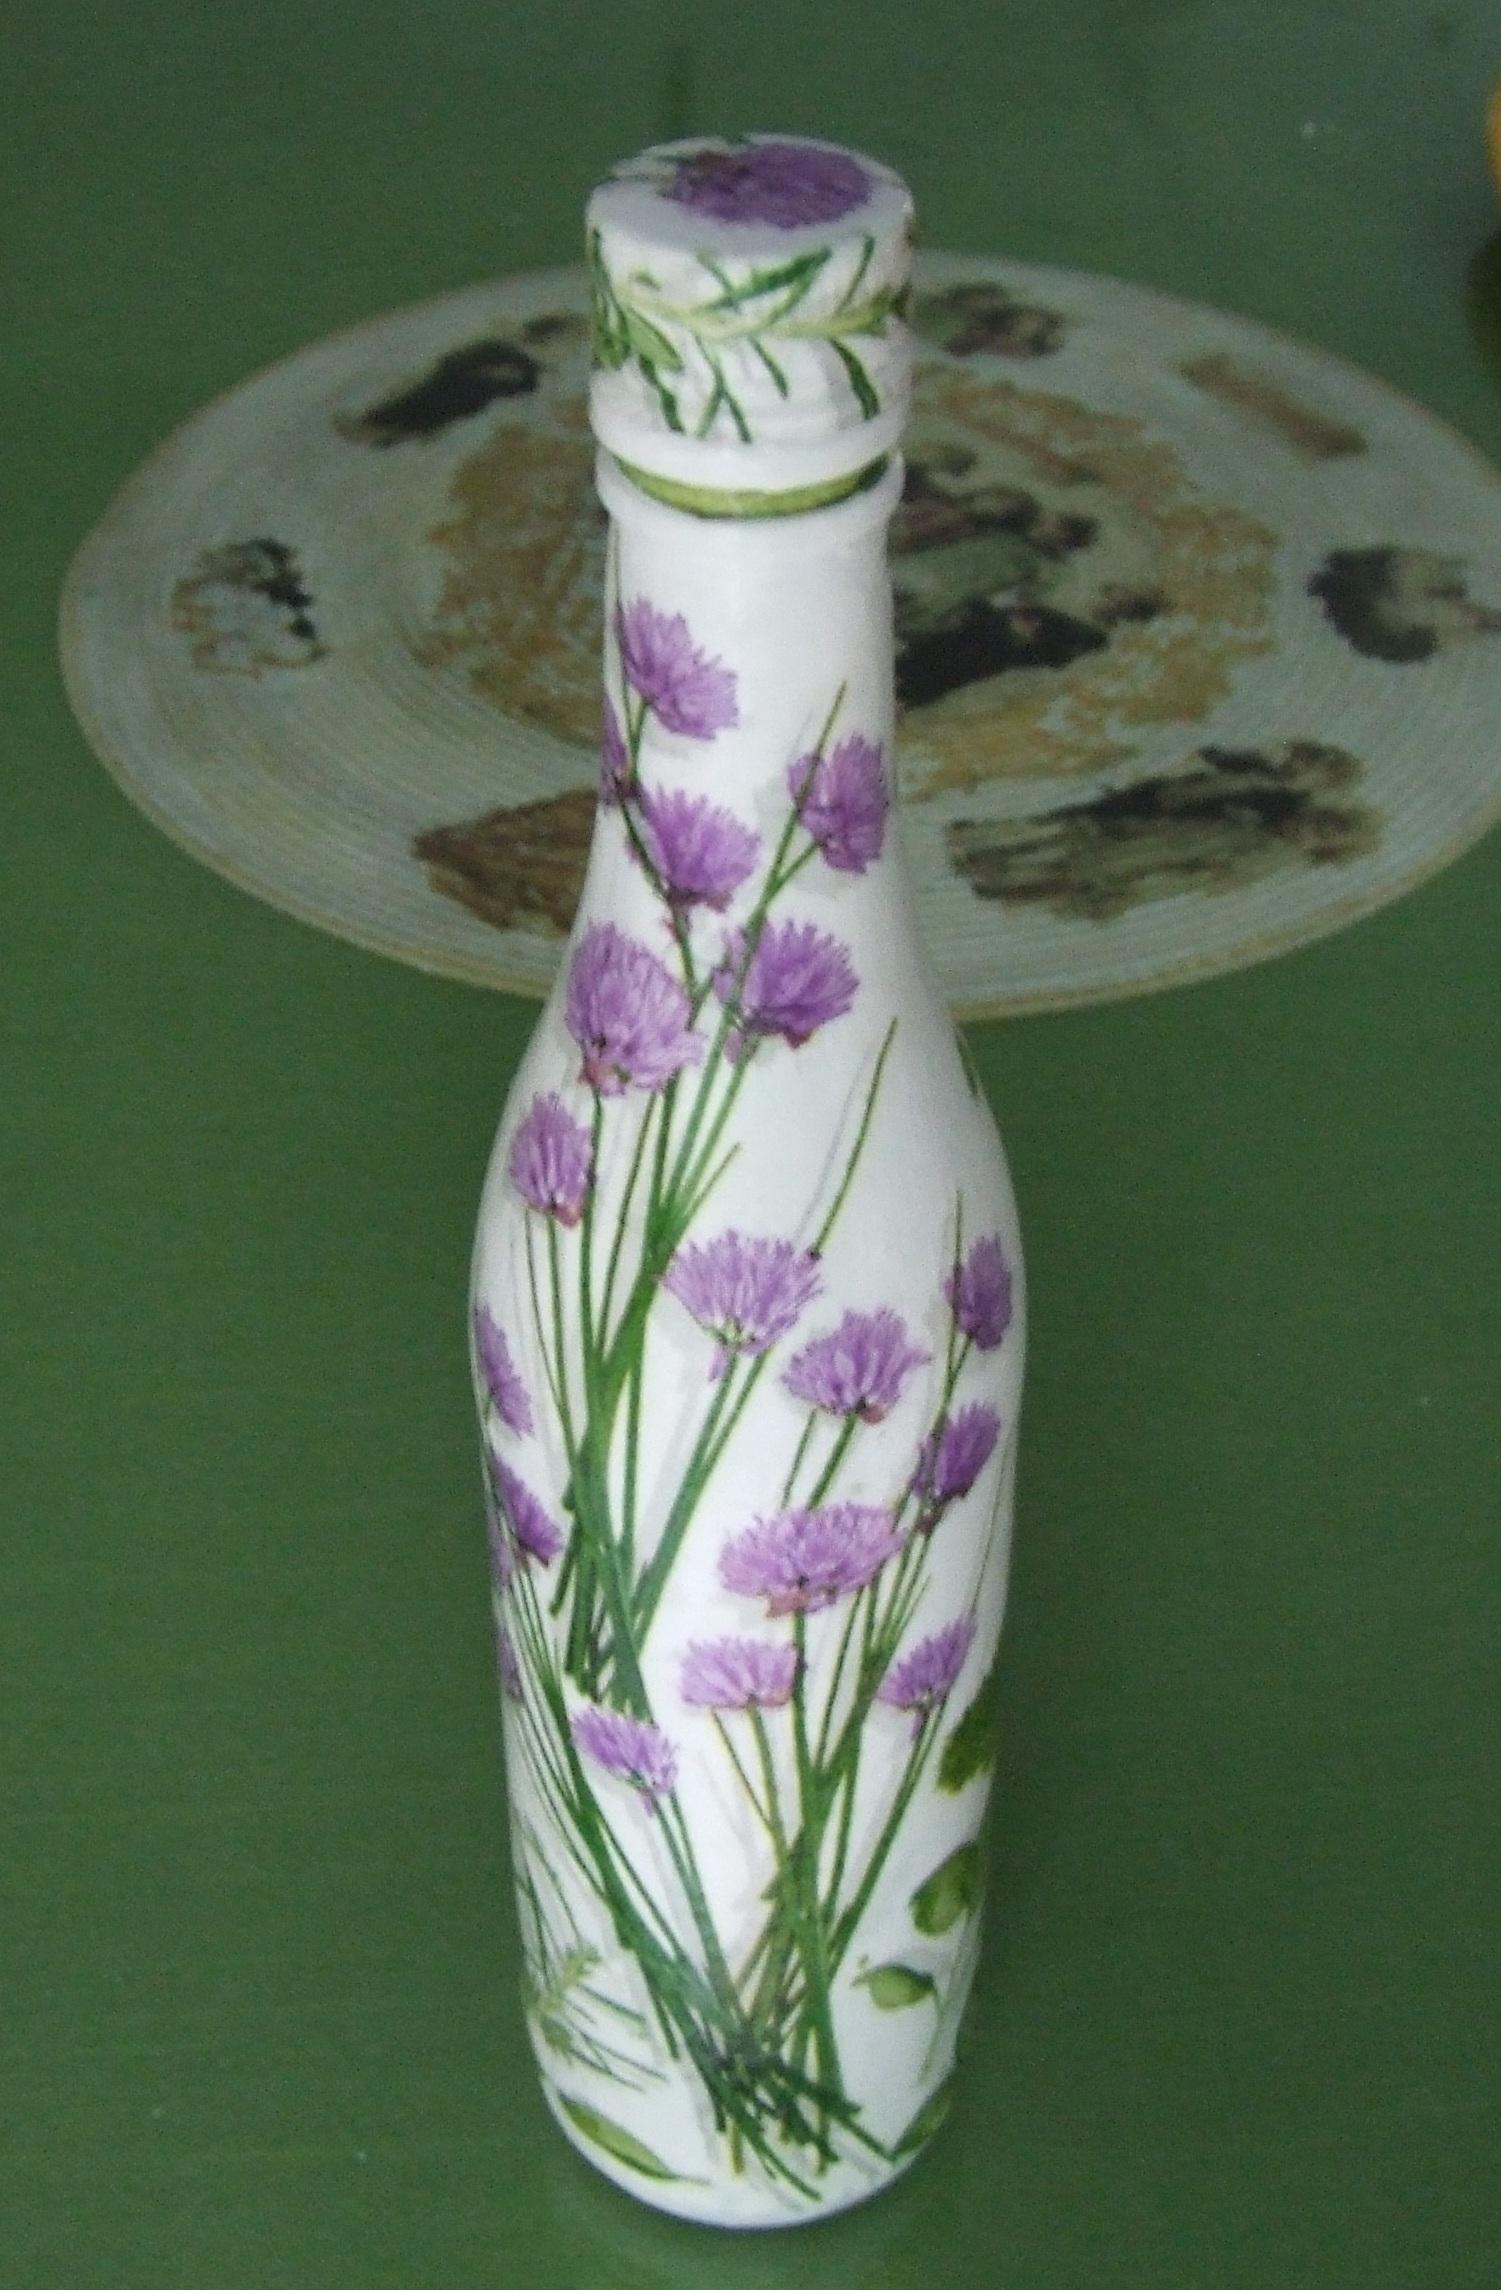 Butelka szklana (zamykana) zdobiona motywem lavenda lub provance